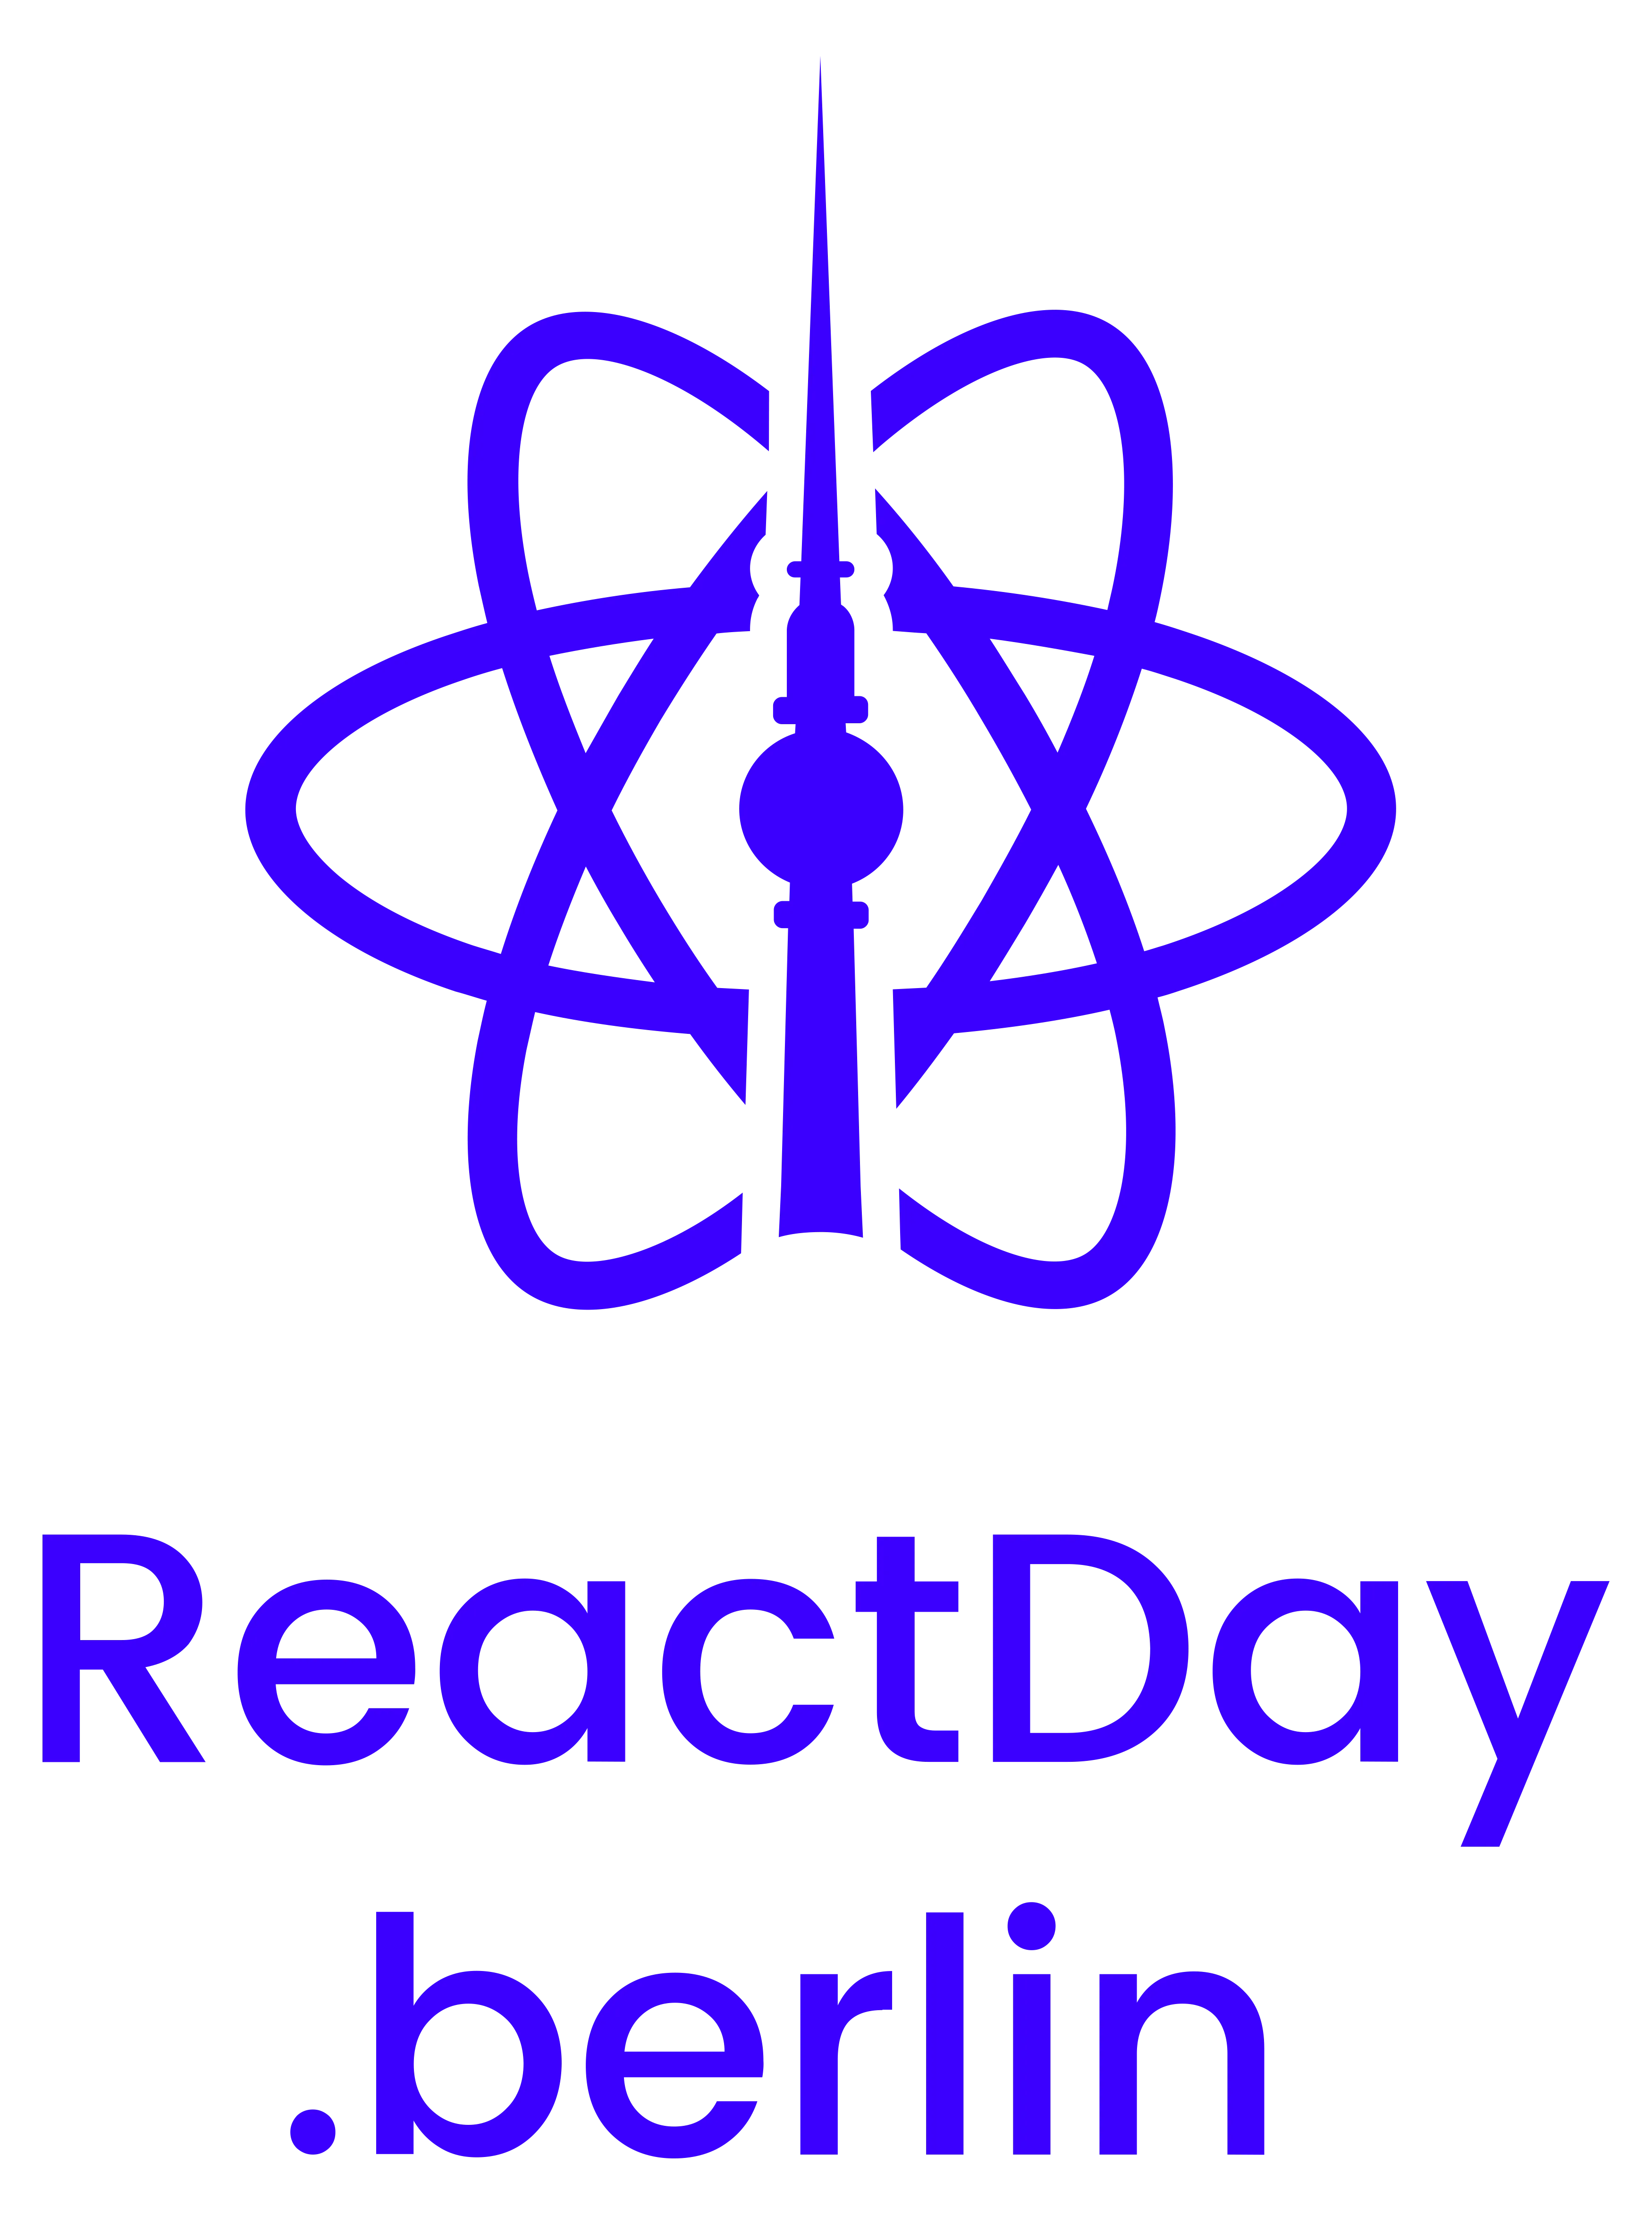 React Day Berlin logo